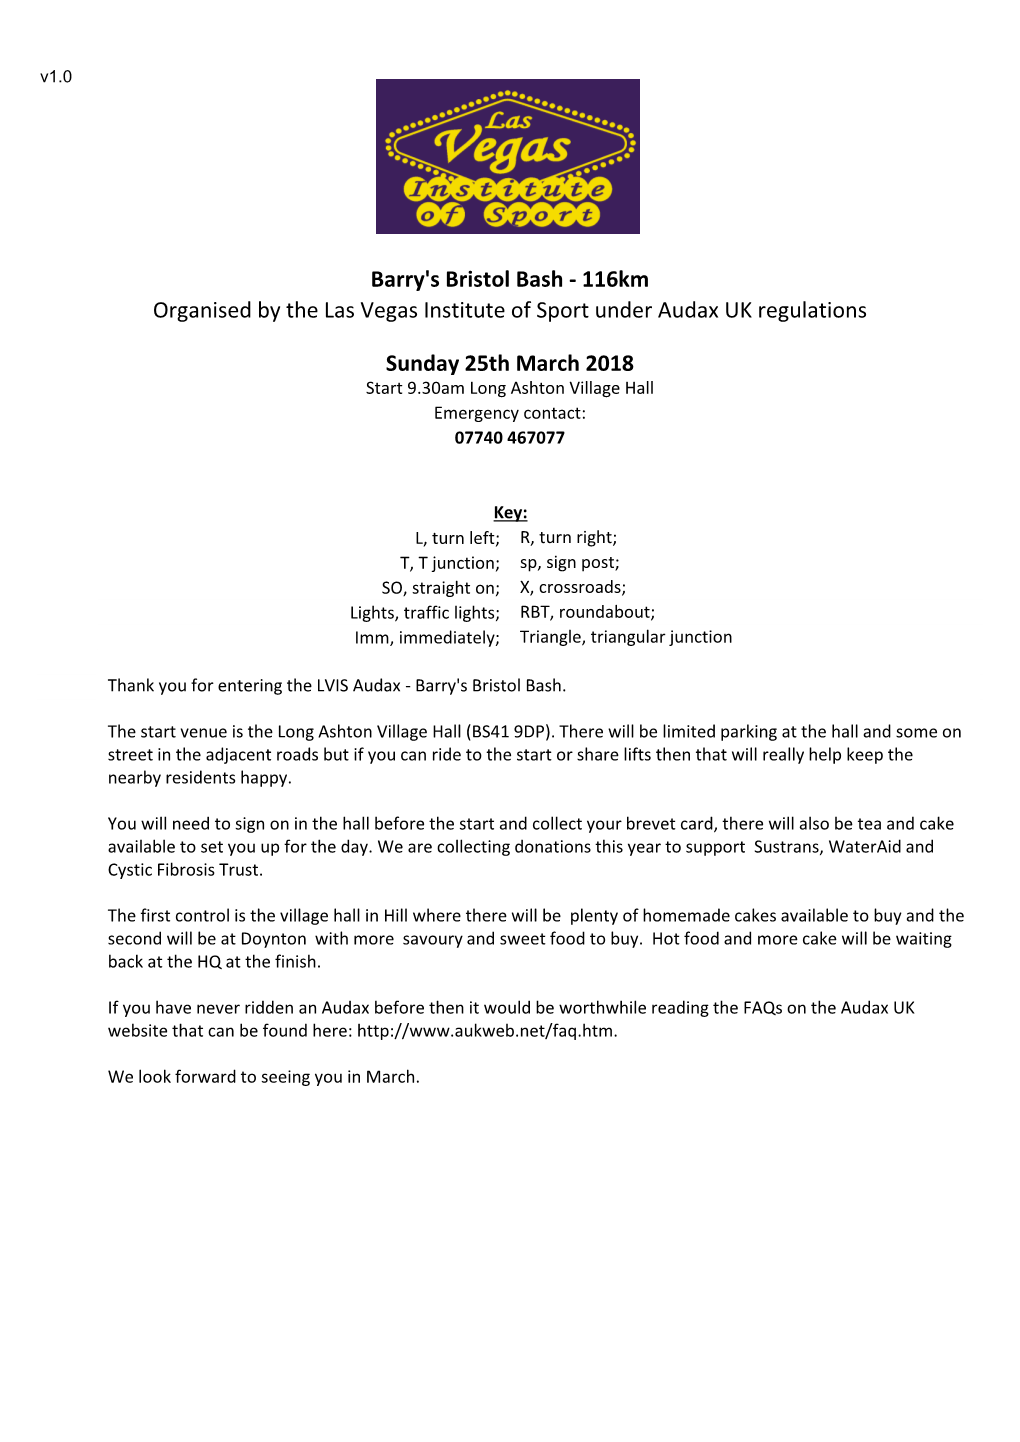 Barry's Bristol Bash - 116Km Organised by the Las Vegas Institute of Sport Under Audax UK Regulations